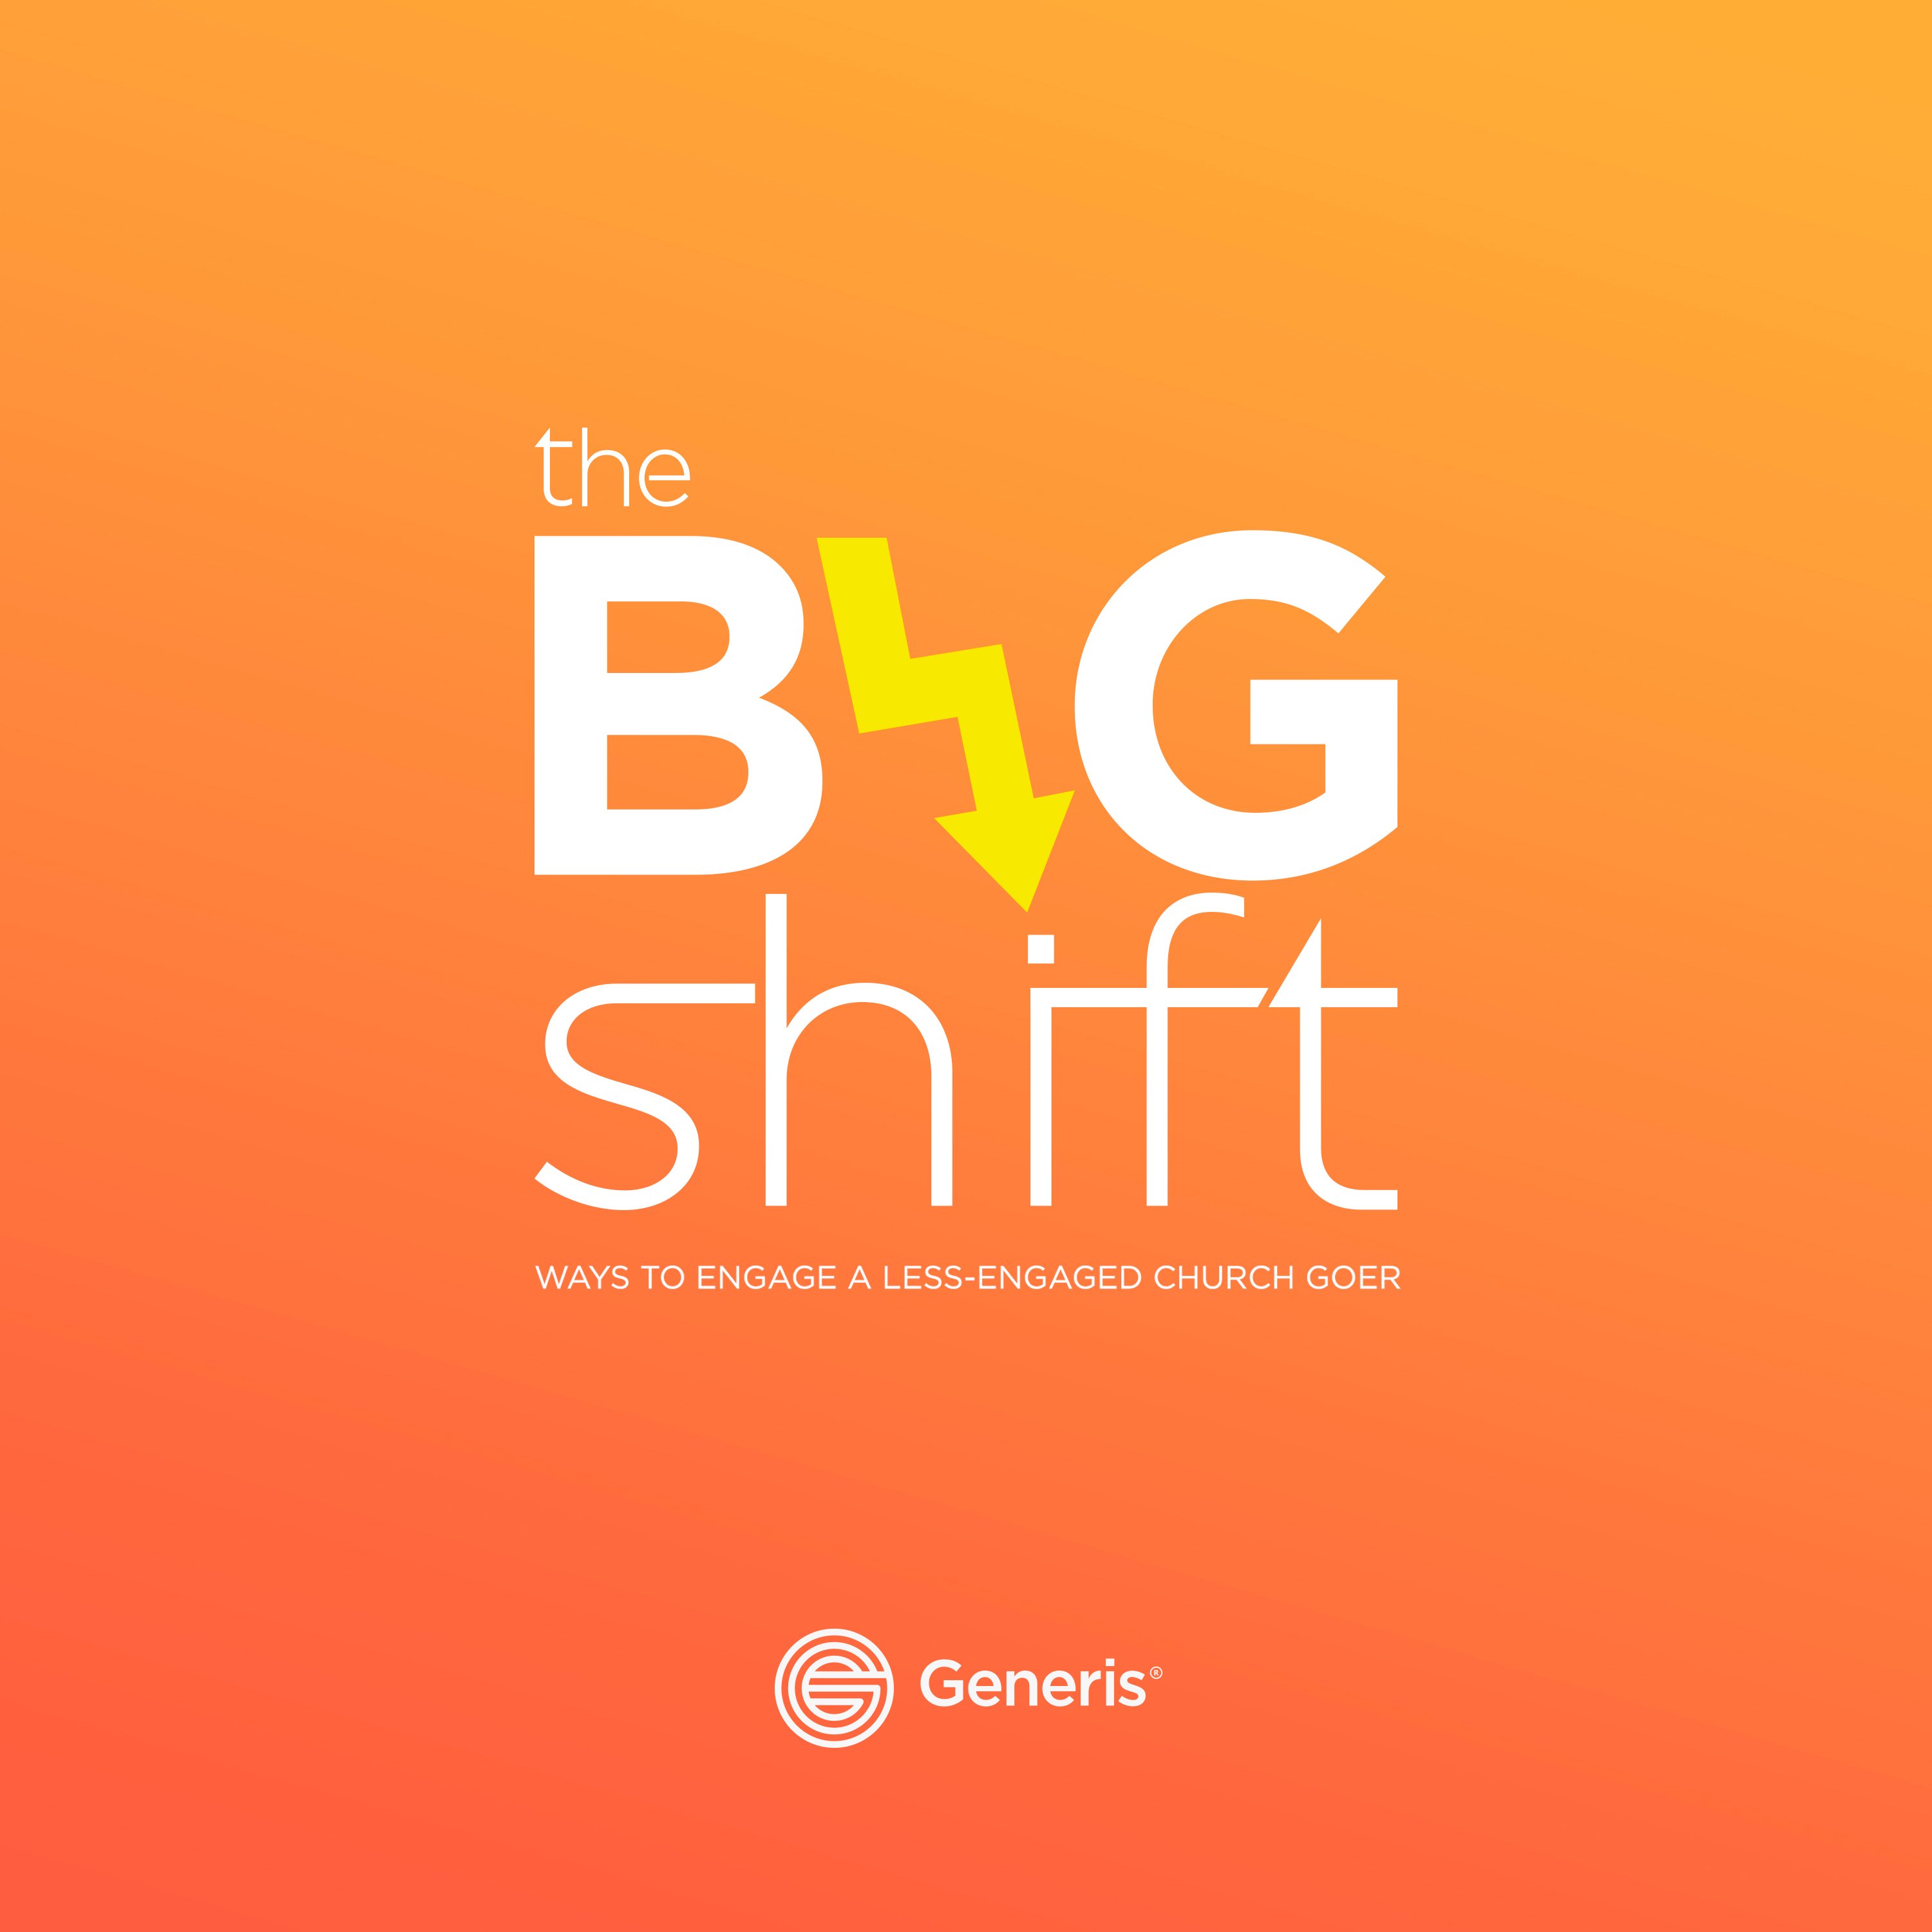 The Big Shift